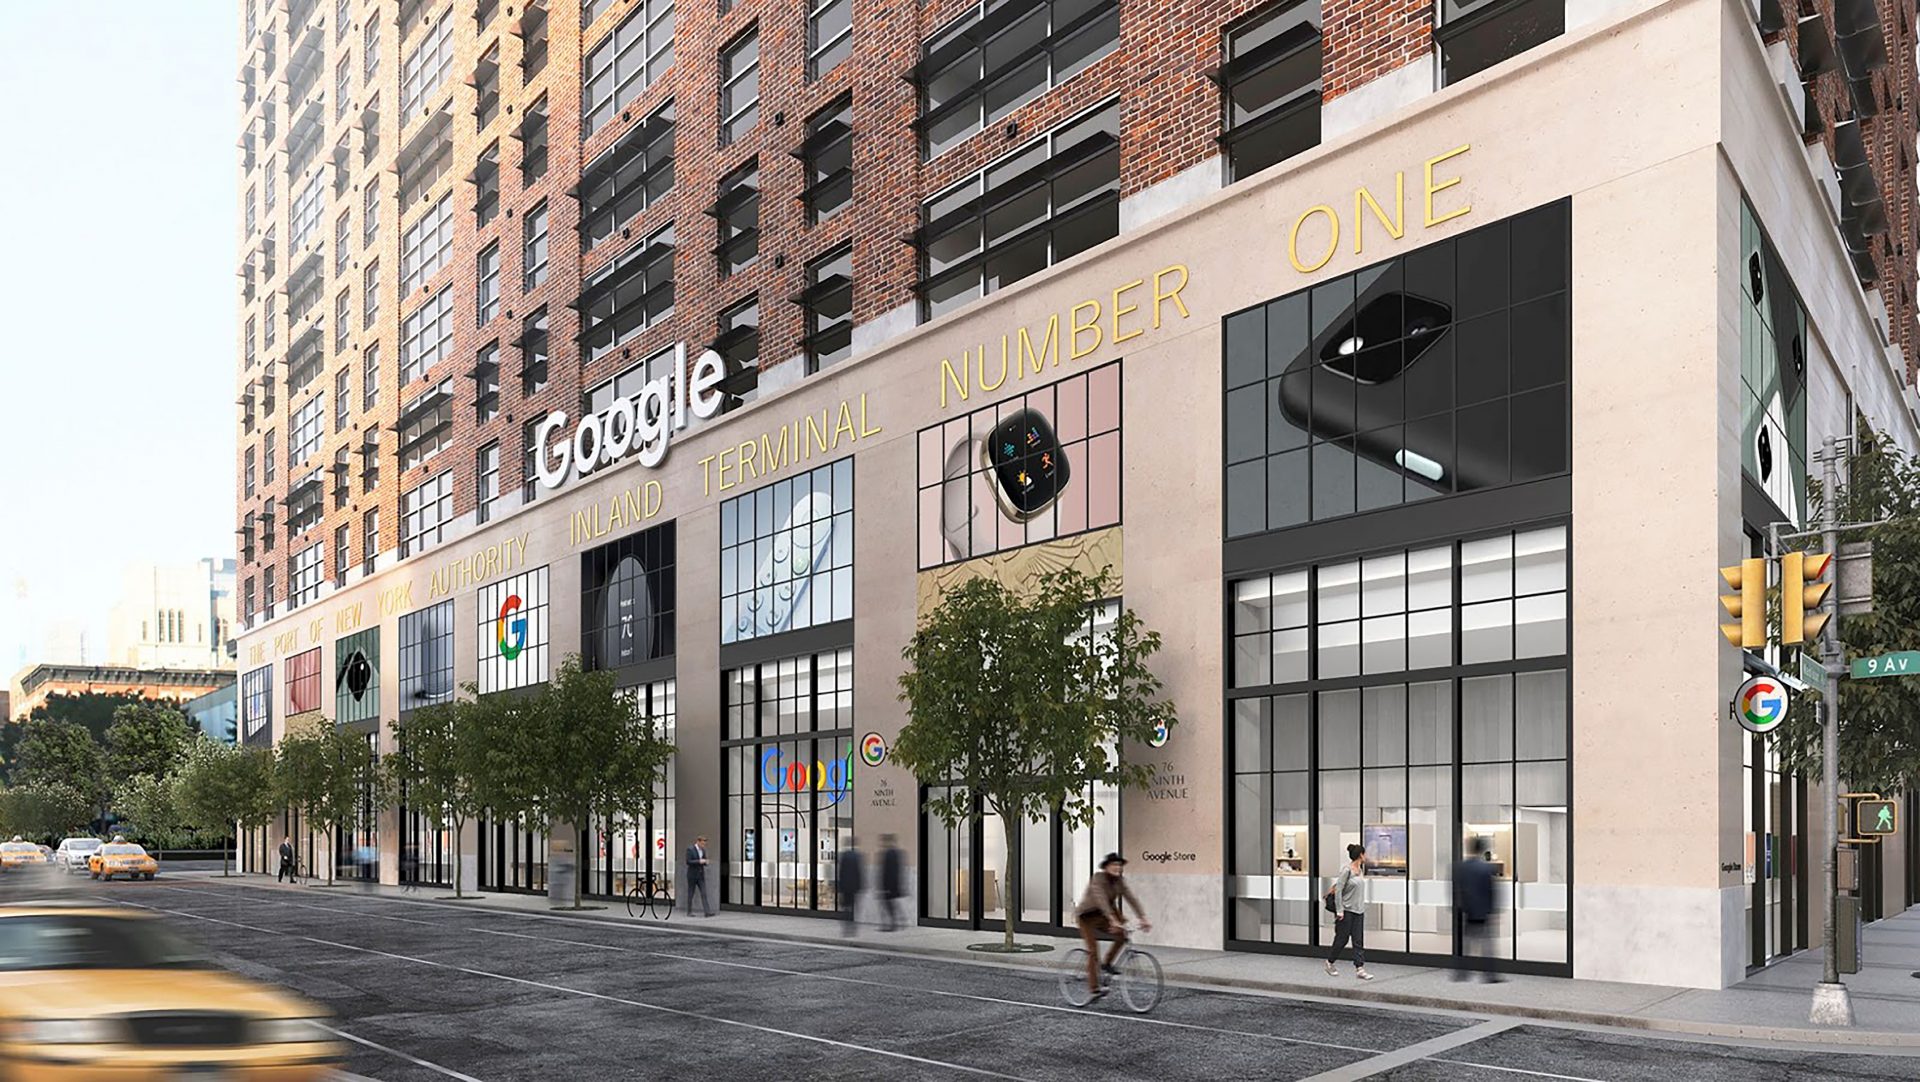 Google เตรียมเปิดร้าน Google Store เป็นของตัวเองกลางมหานครนิวยอร์ก ซัมเมอร์นี้